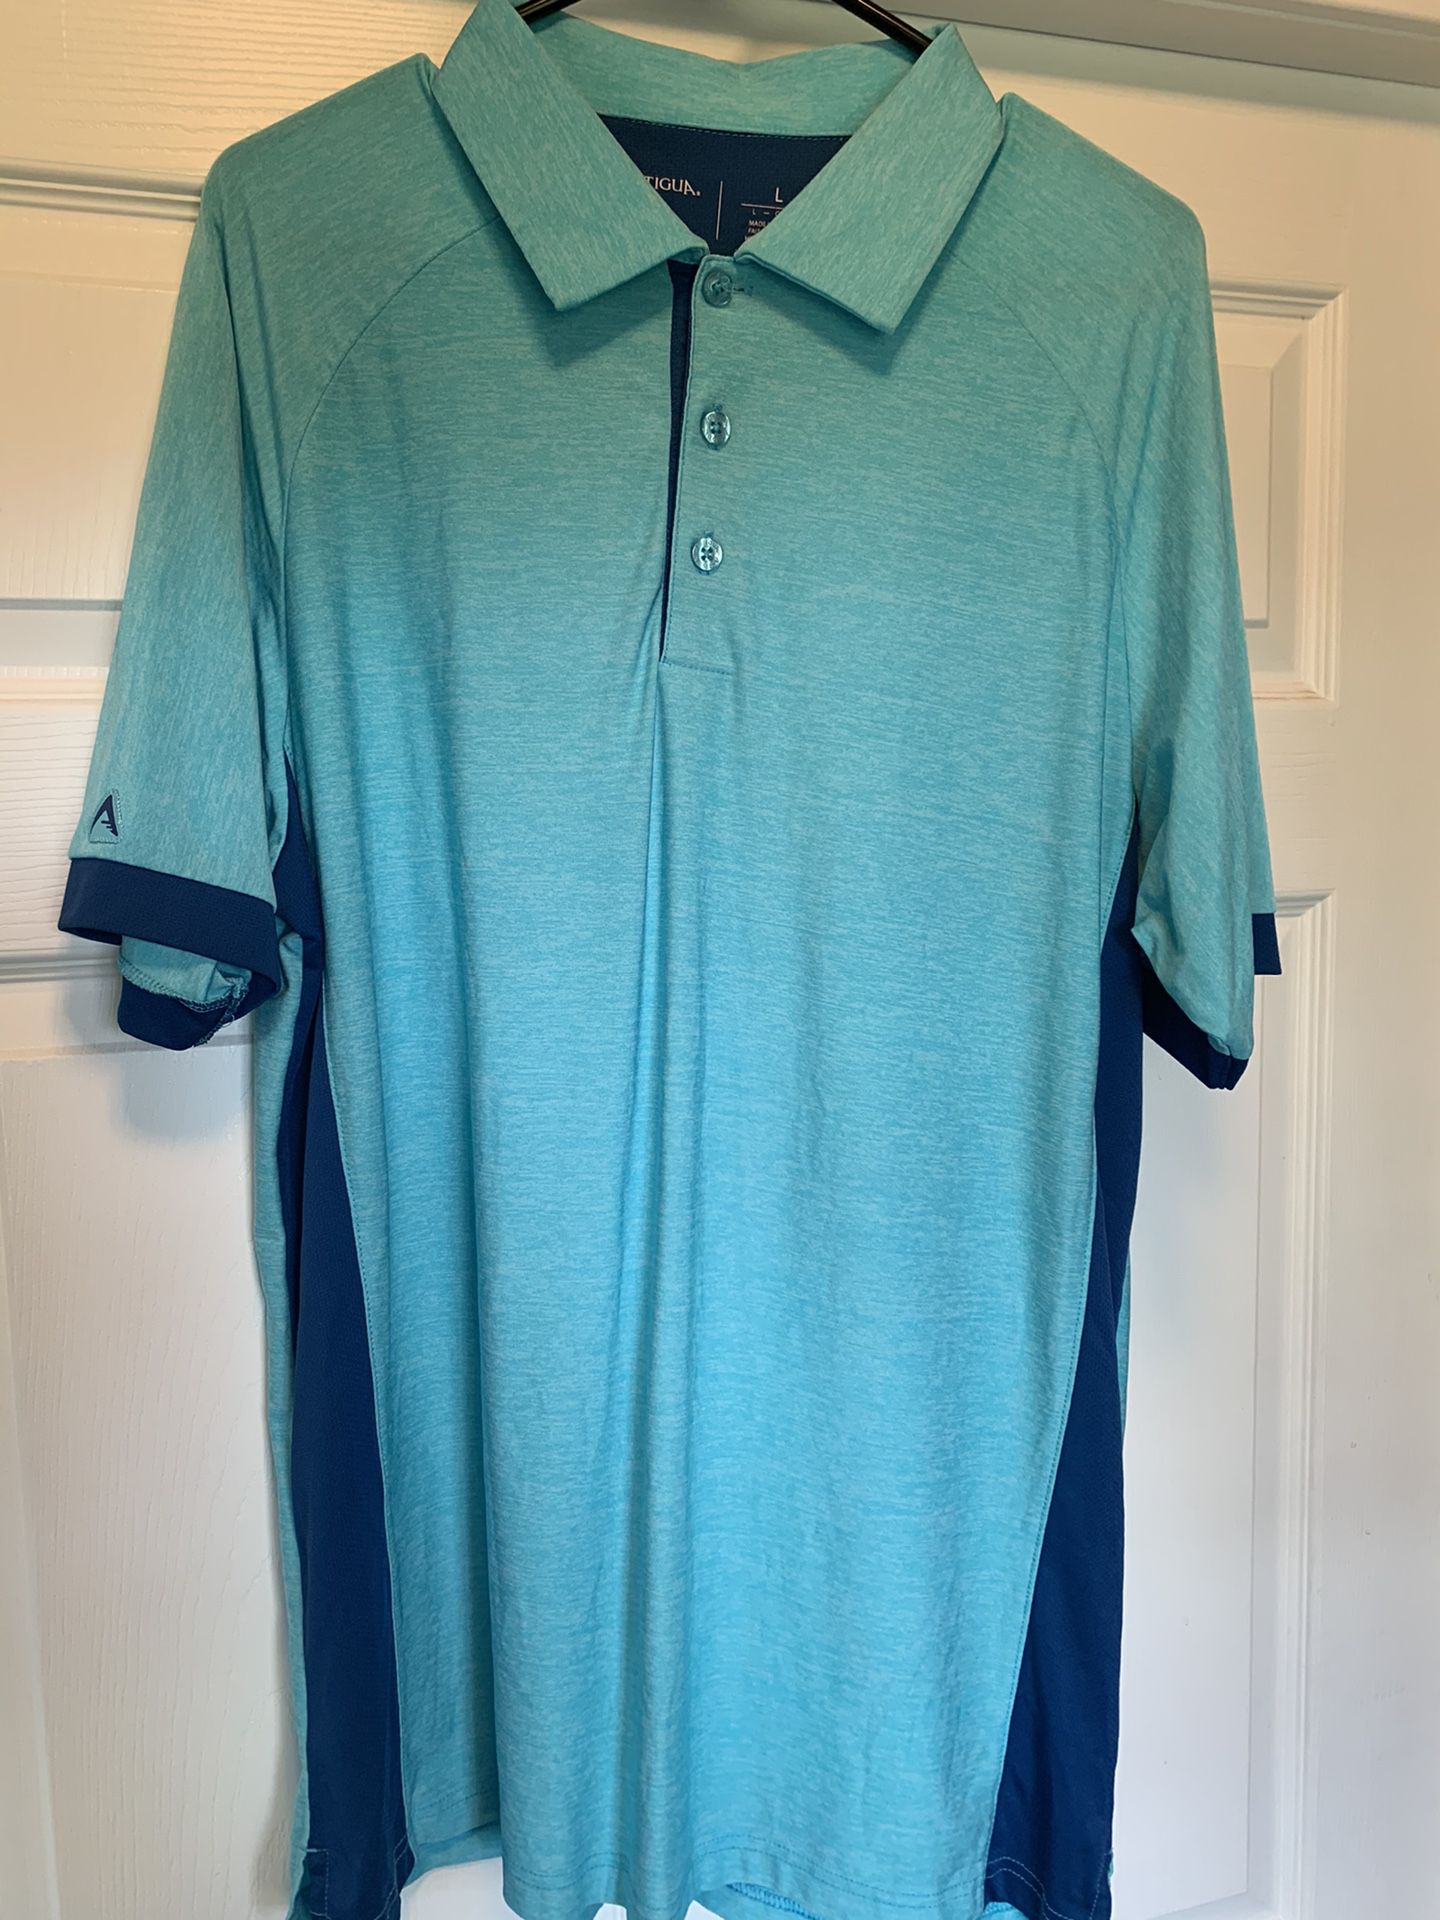 Antigua golf shirt size L